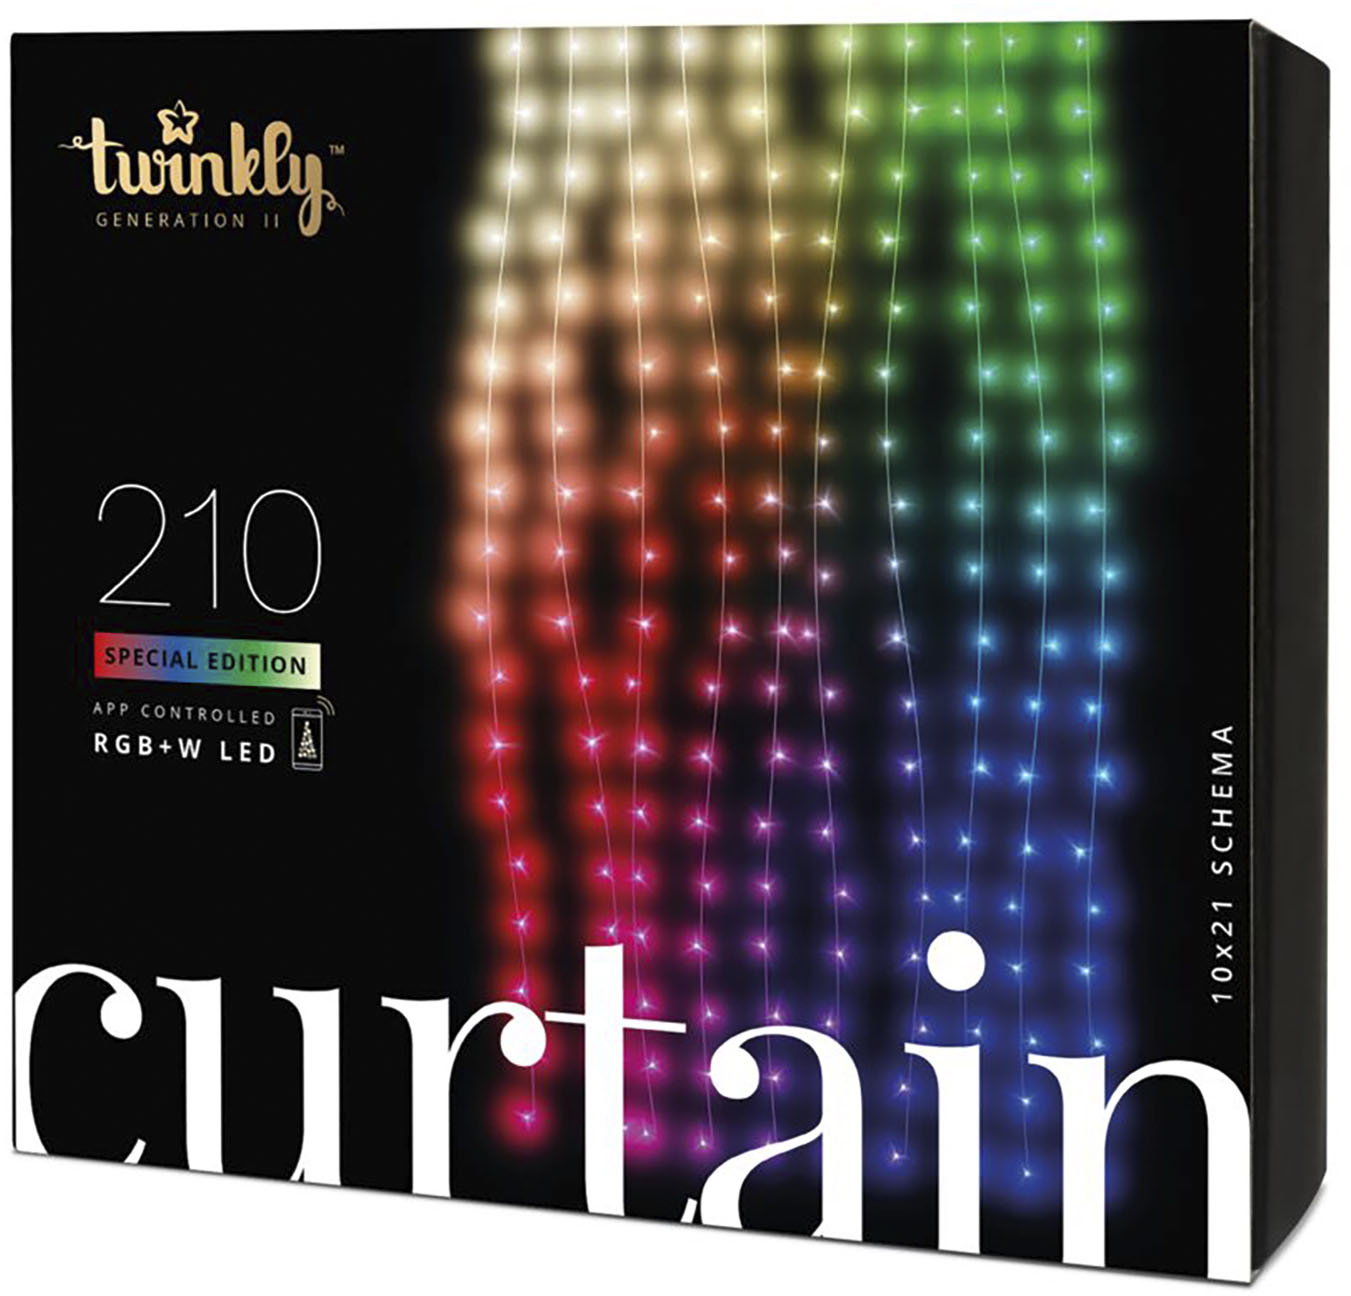 Twinkly - Smart Light Curtain 210 RGB + LED Generation II - Multi